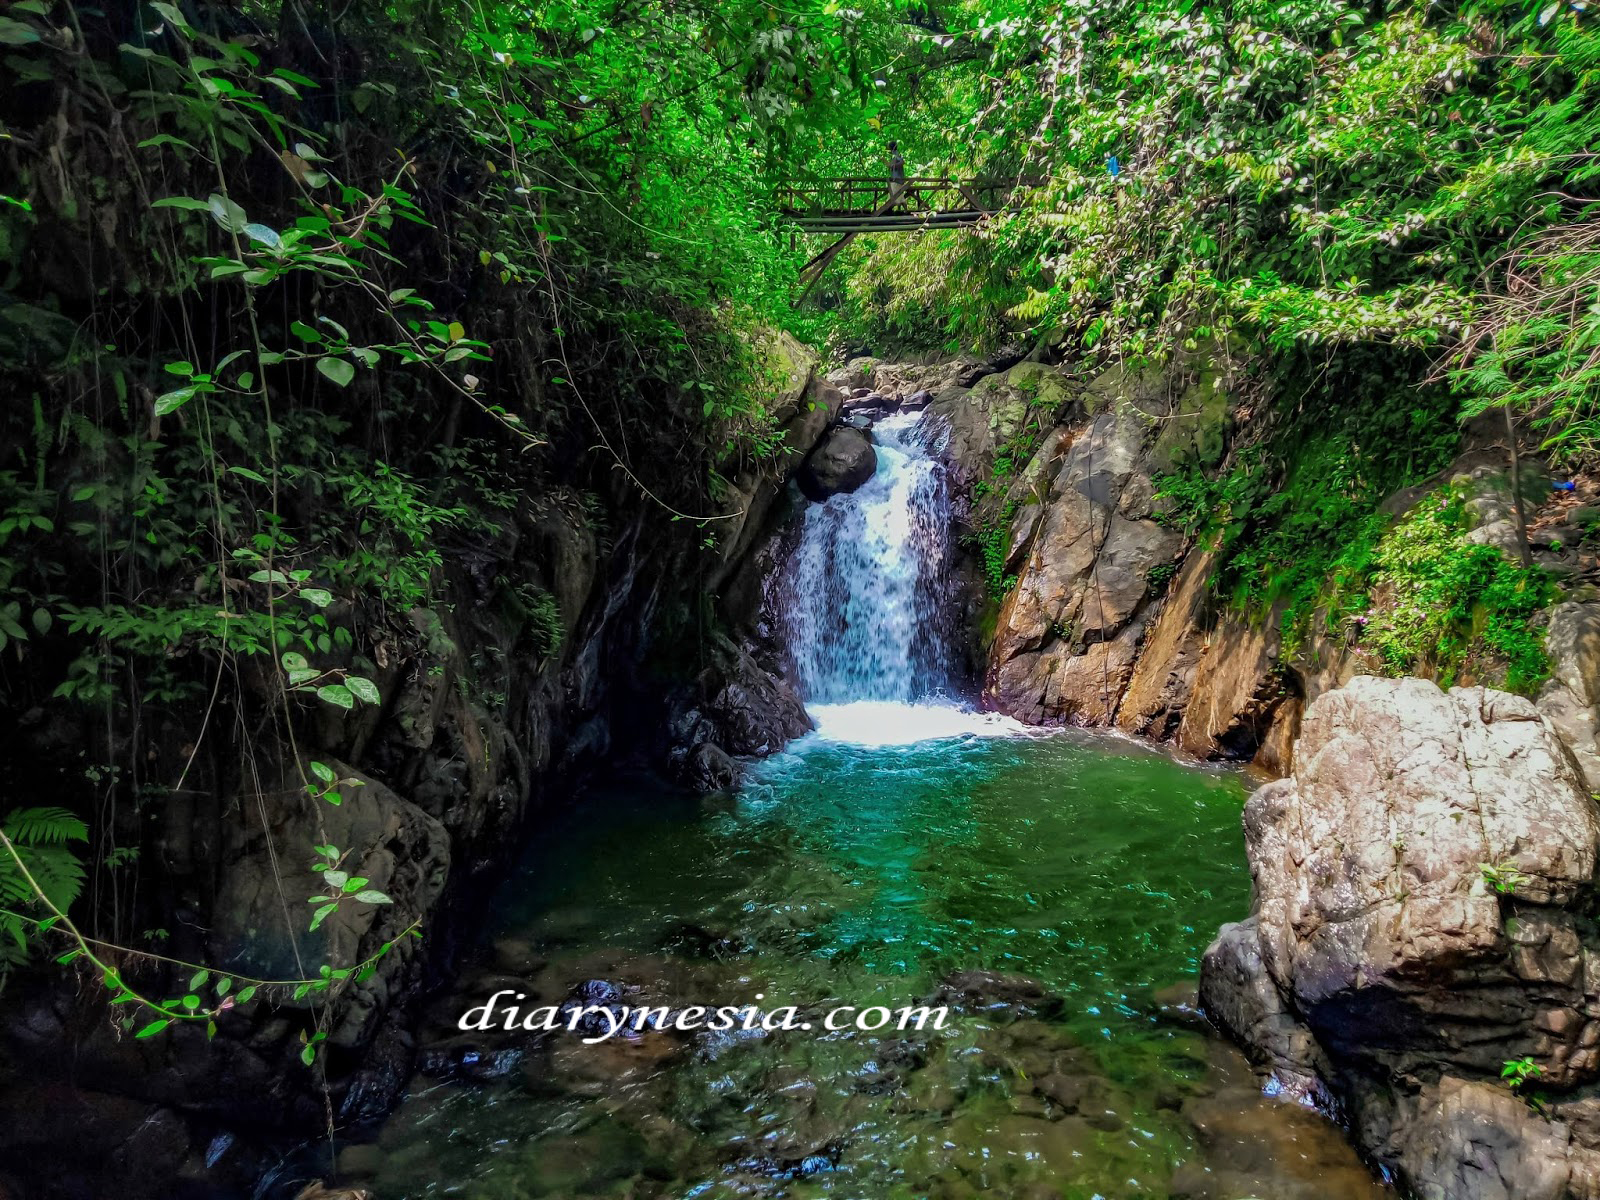 Refreshing natural waterfall in bogor, best waterfall in bogor, west java in bogor, diarynesia